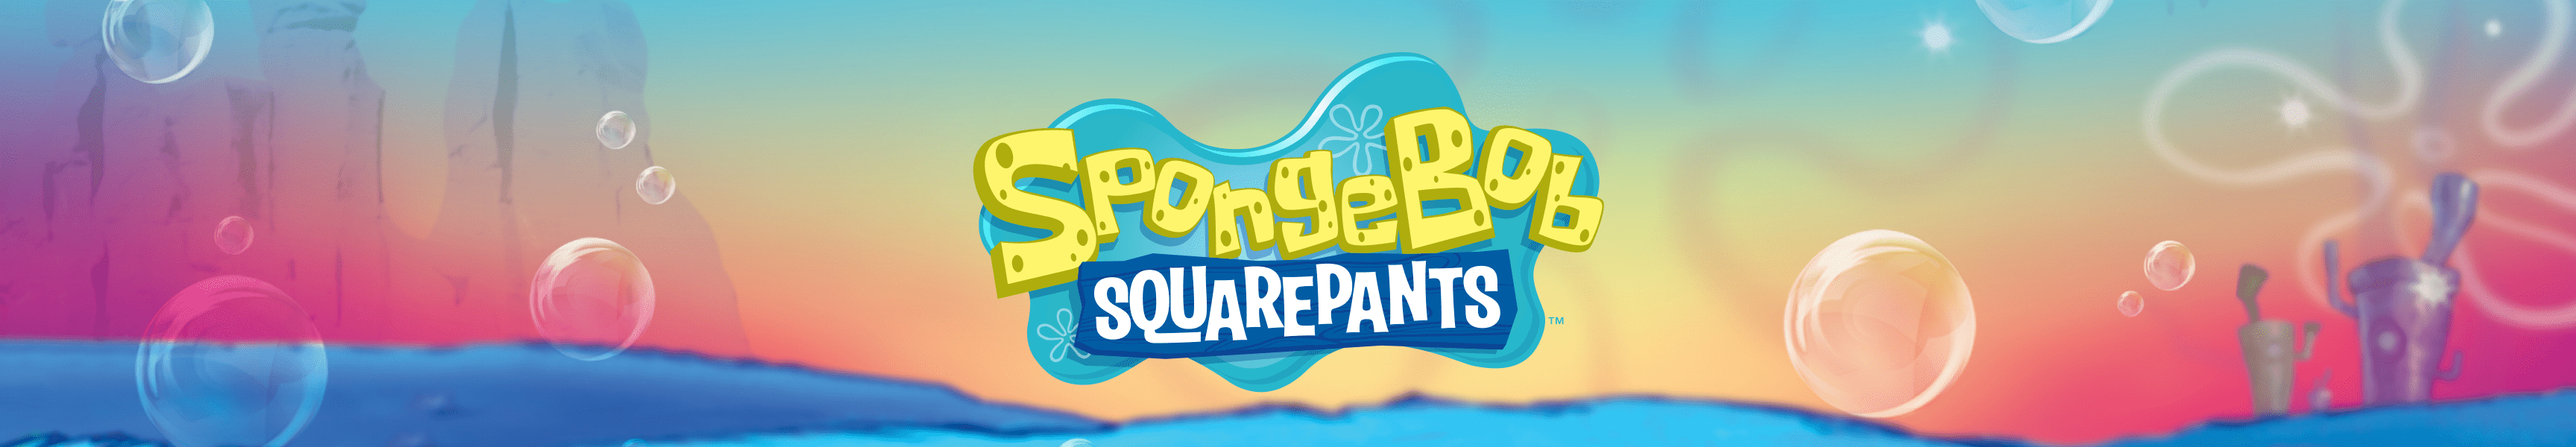 SpongeBob SquarePants Big Game Ready